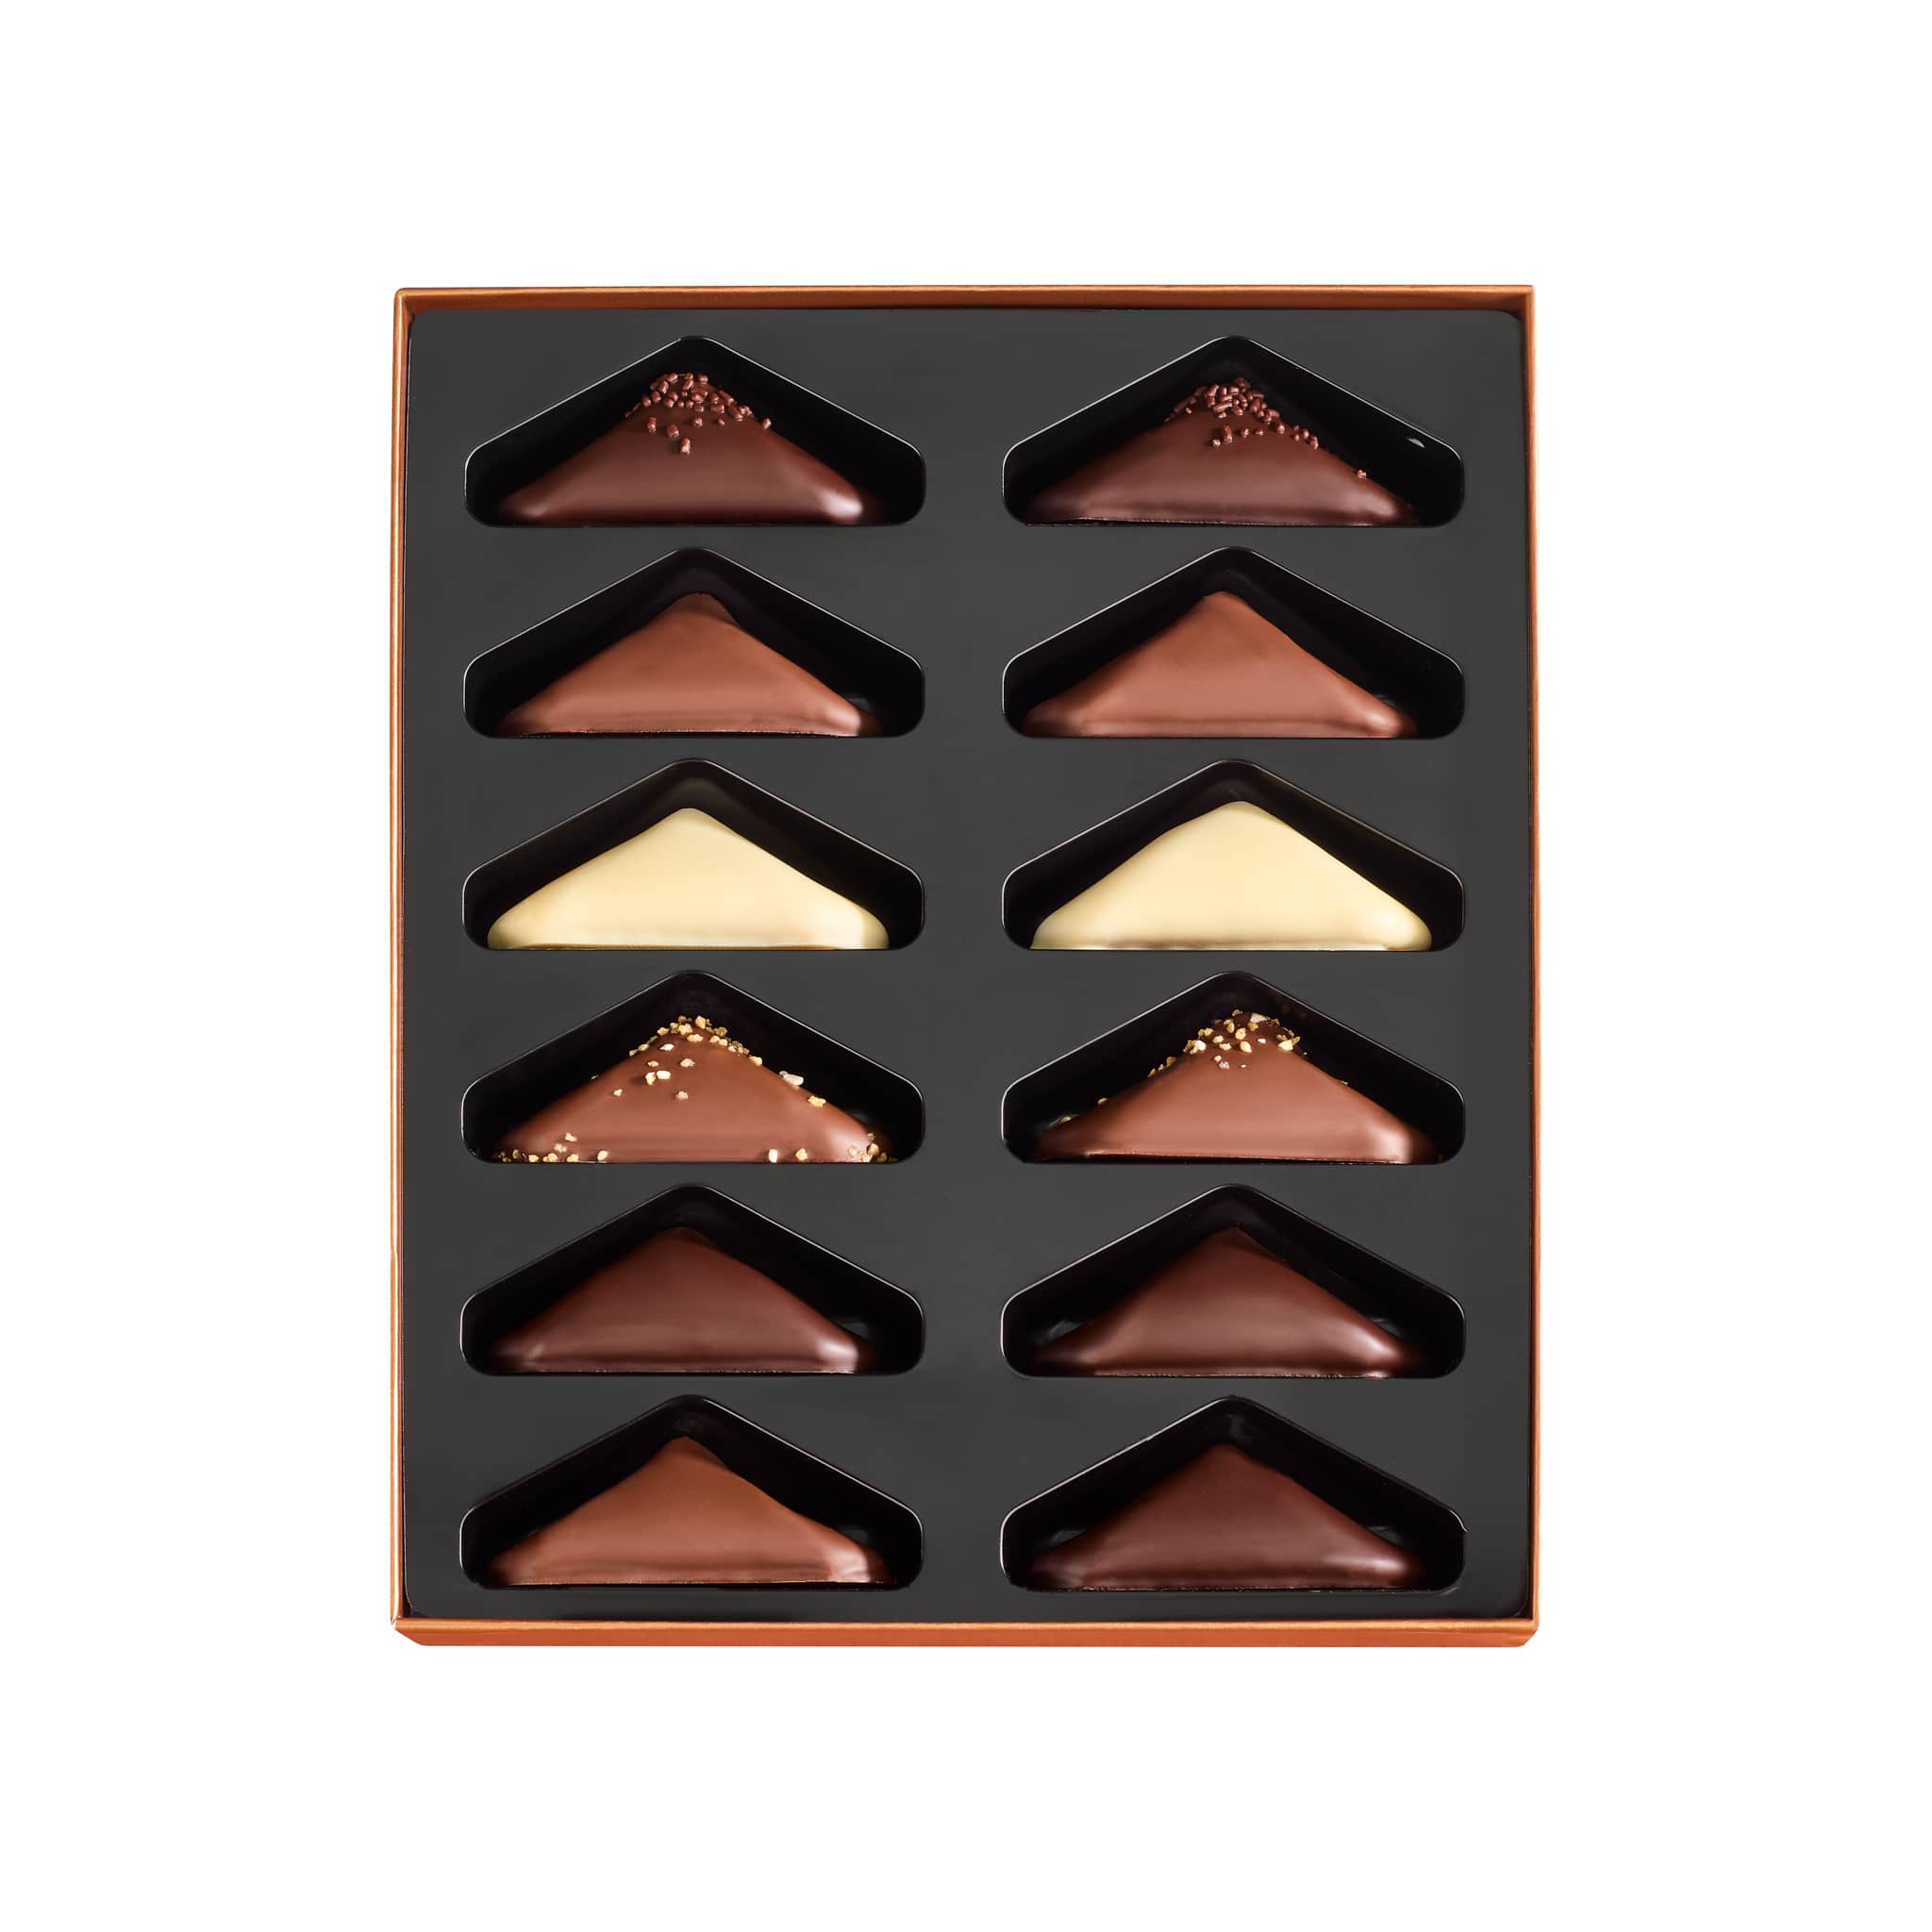 Neuhaus "Irresistibles" Belgian Chocolate Selection 250g box open